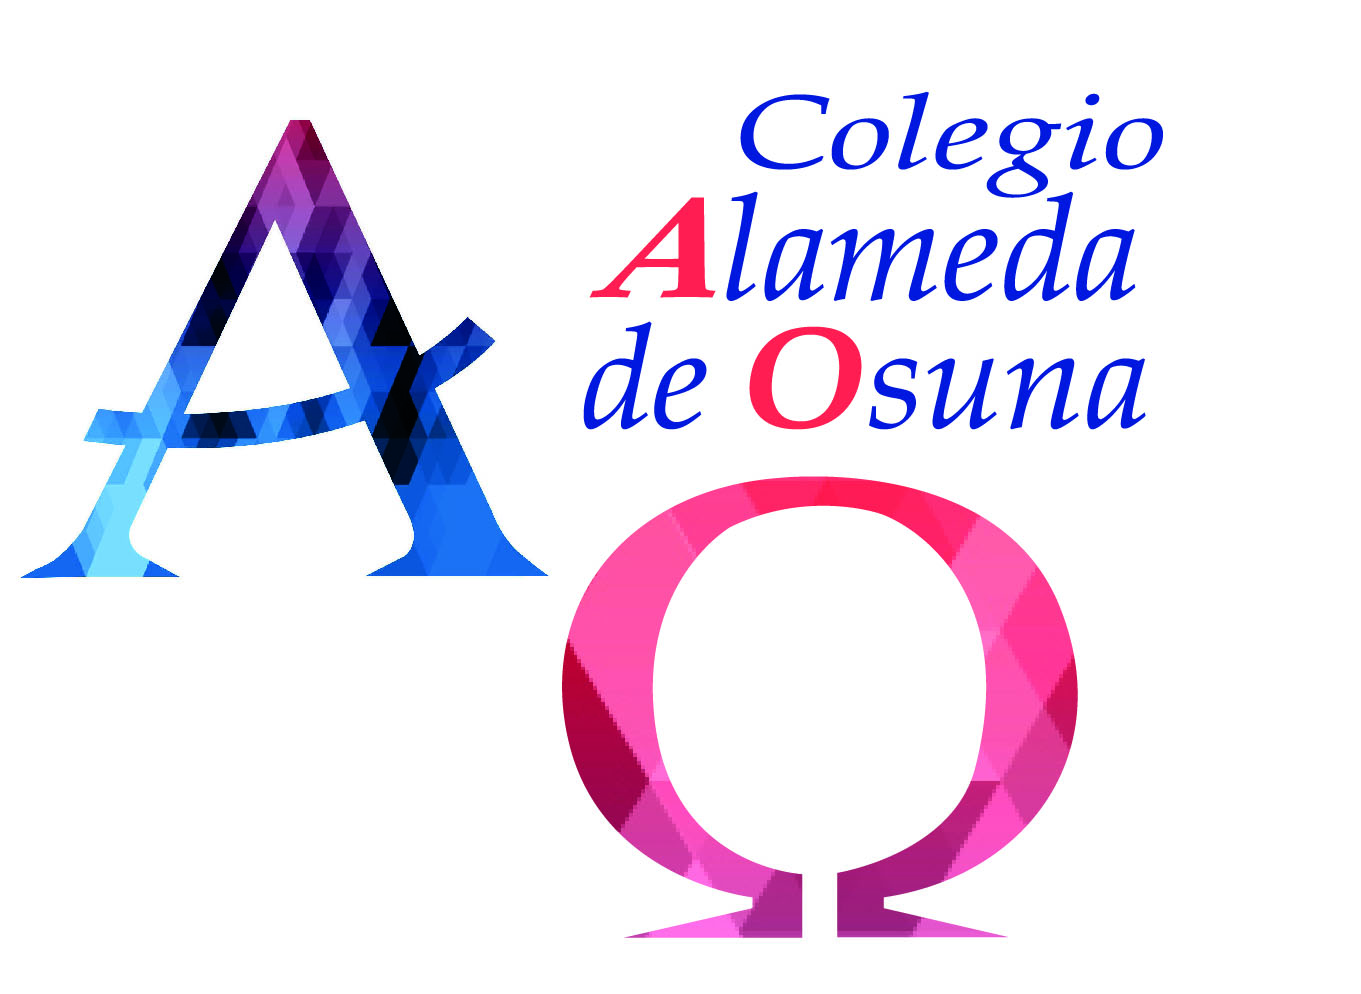 Colegio Alameda de Osuna